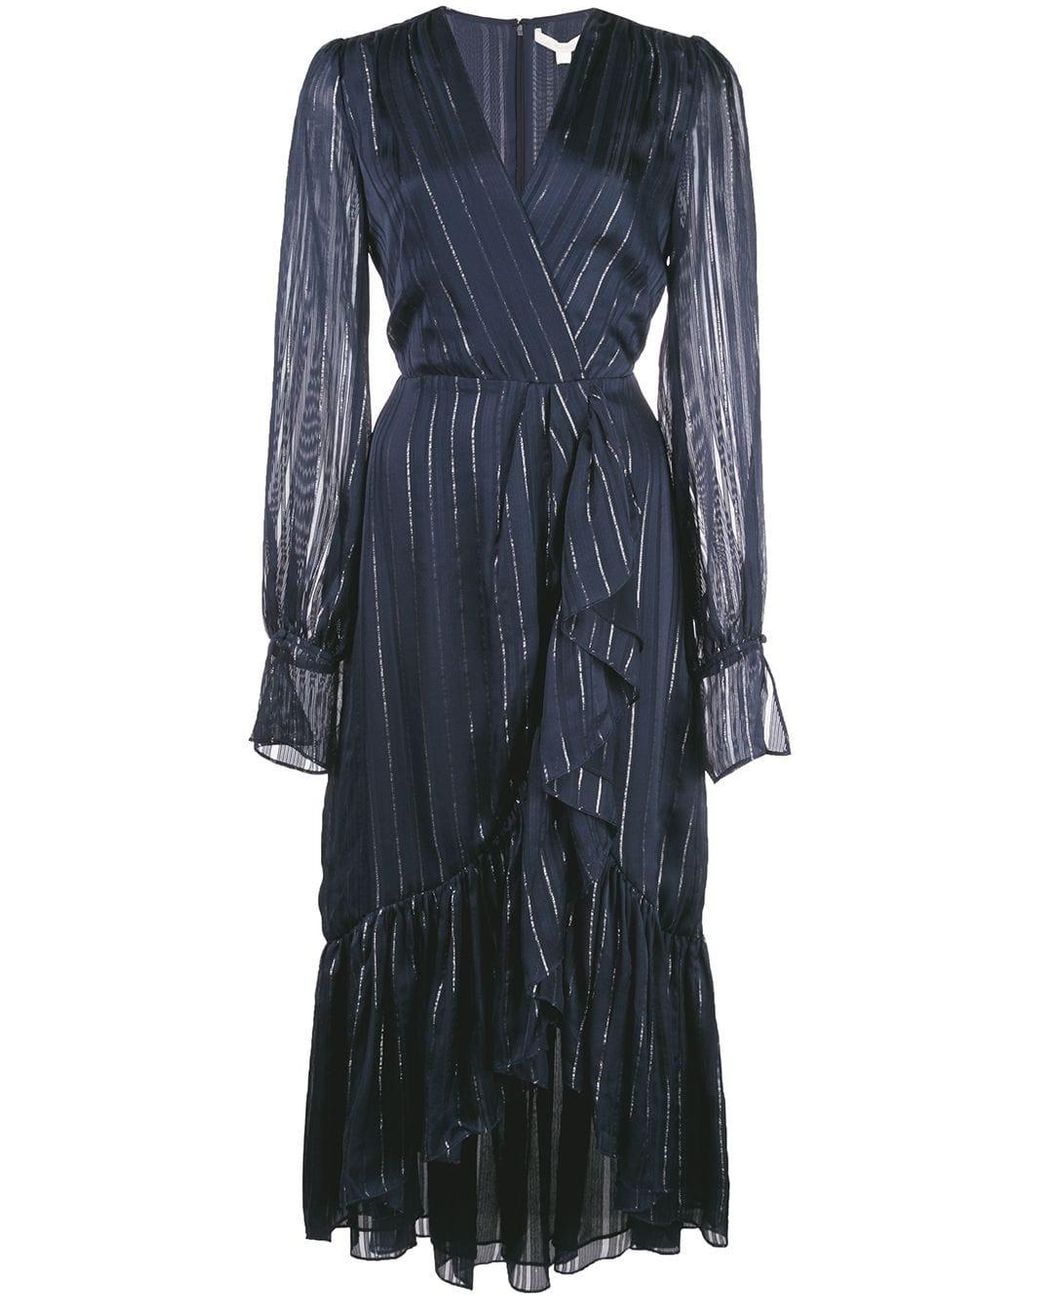 Jonathan Simkhai Silk Metallic Wrap Dress in Blue - Lyst